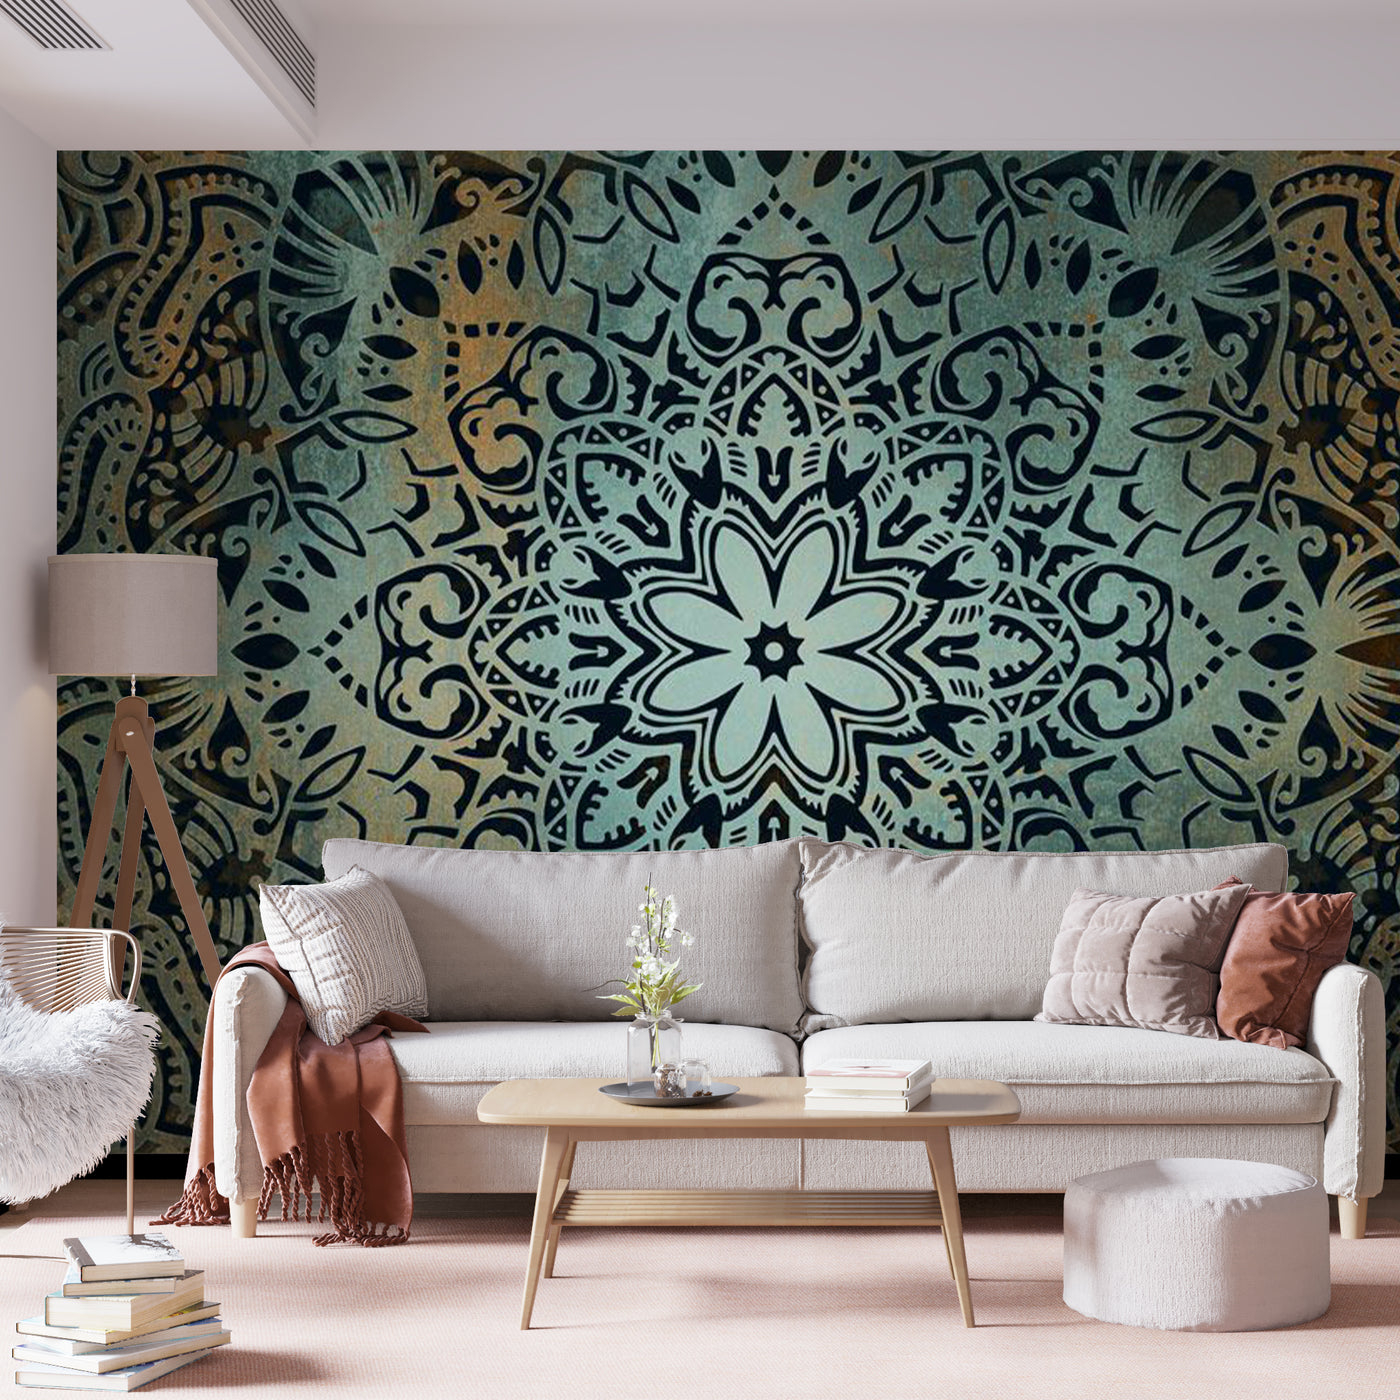 Peel & Stick Mandala Wall Mural - Flowers Of Calm Mandala - Removable Wall Decals